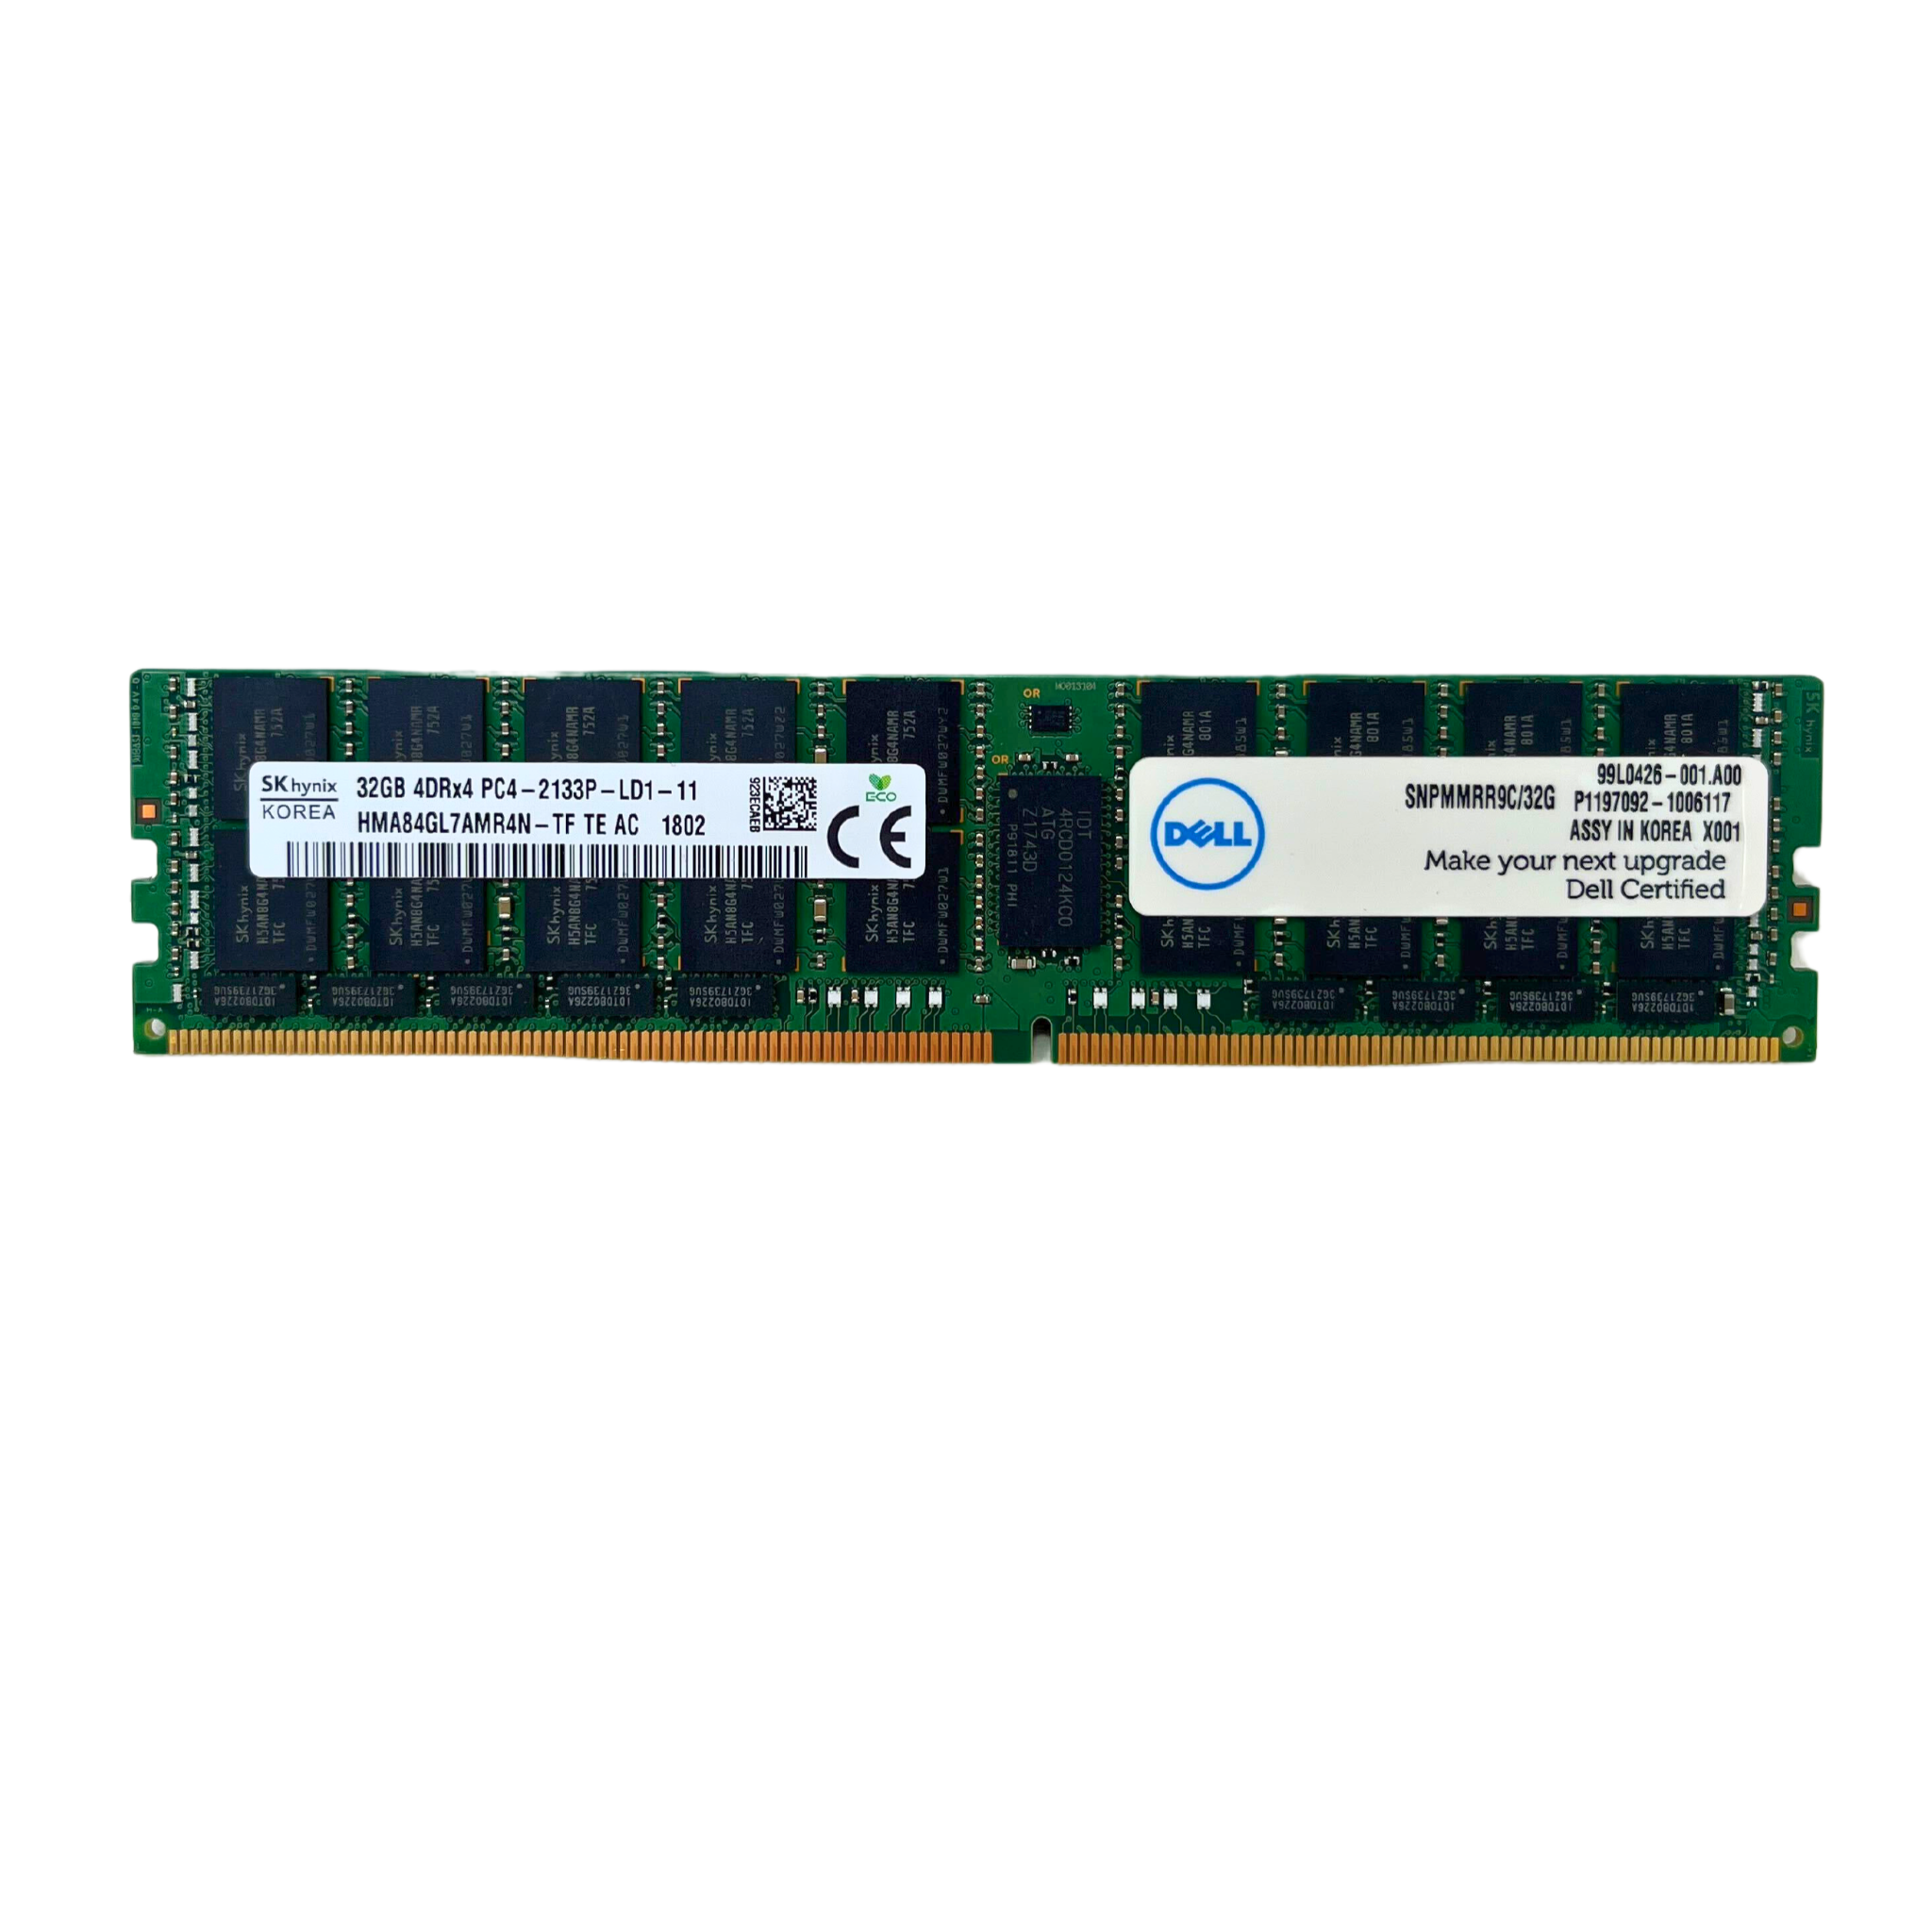 Dell 32GB 4DRx4 PC4-2133P-L DDR4 LRDIMM ECC Registered Memory (M386A4G40DM0-CPB - 3rdParty)